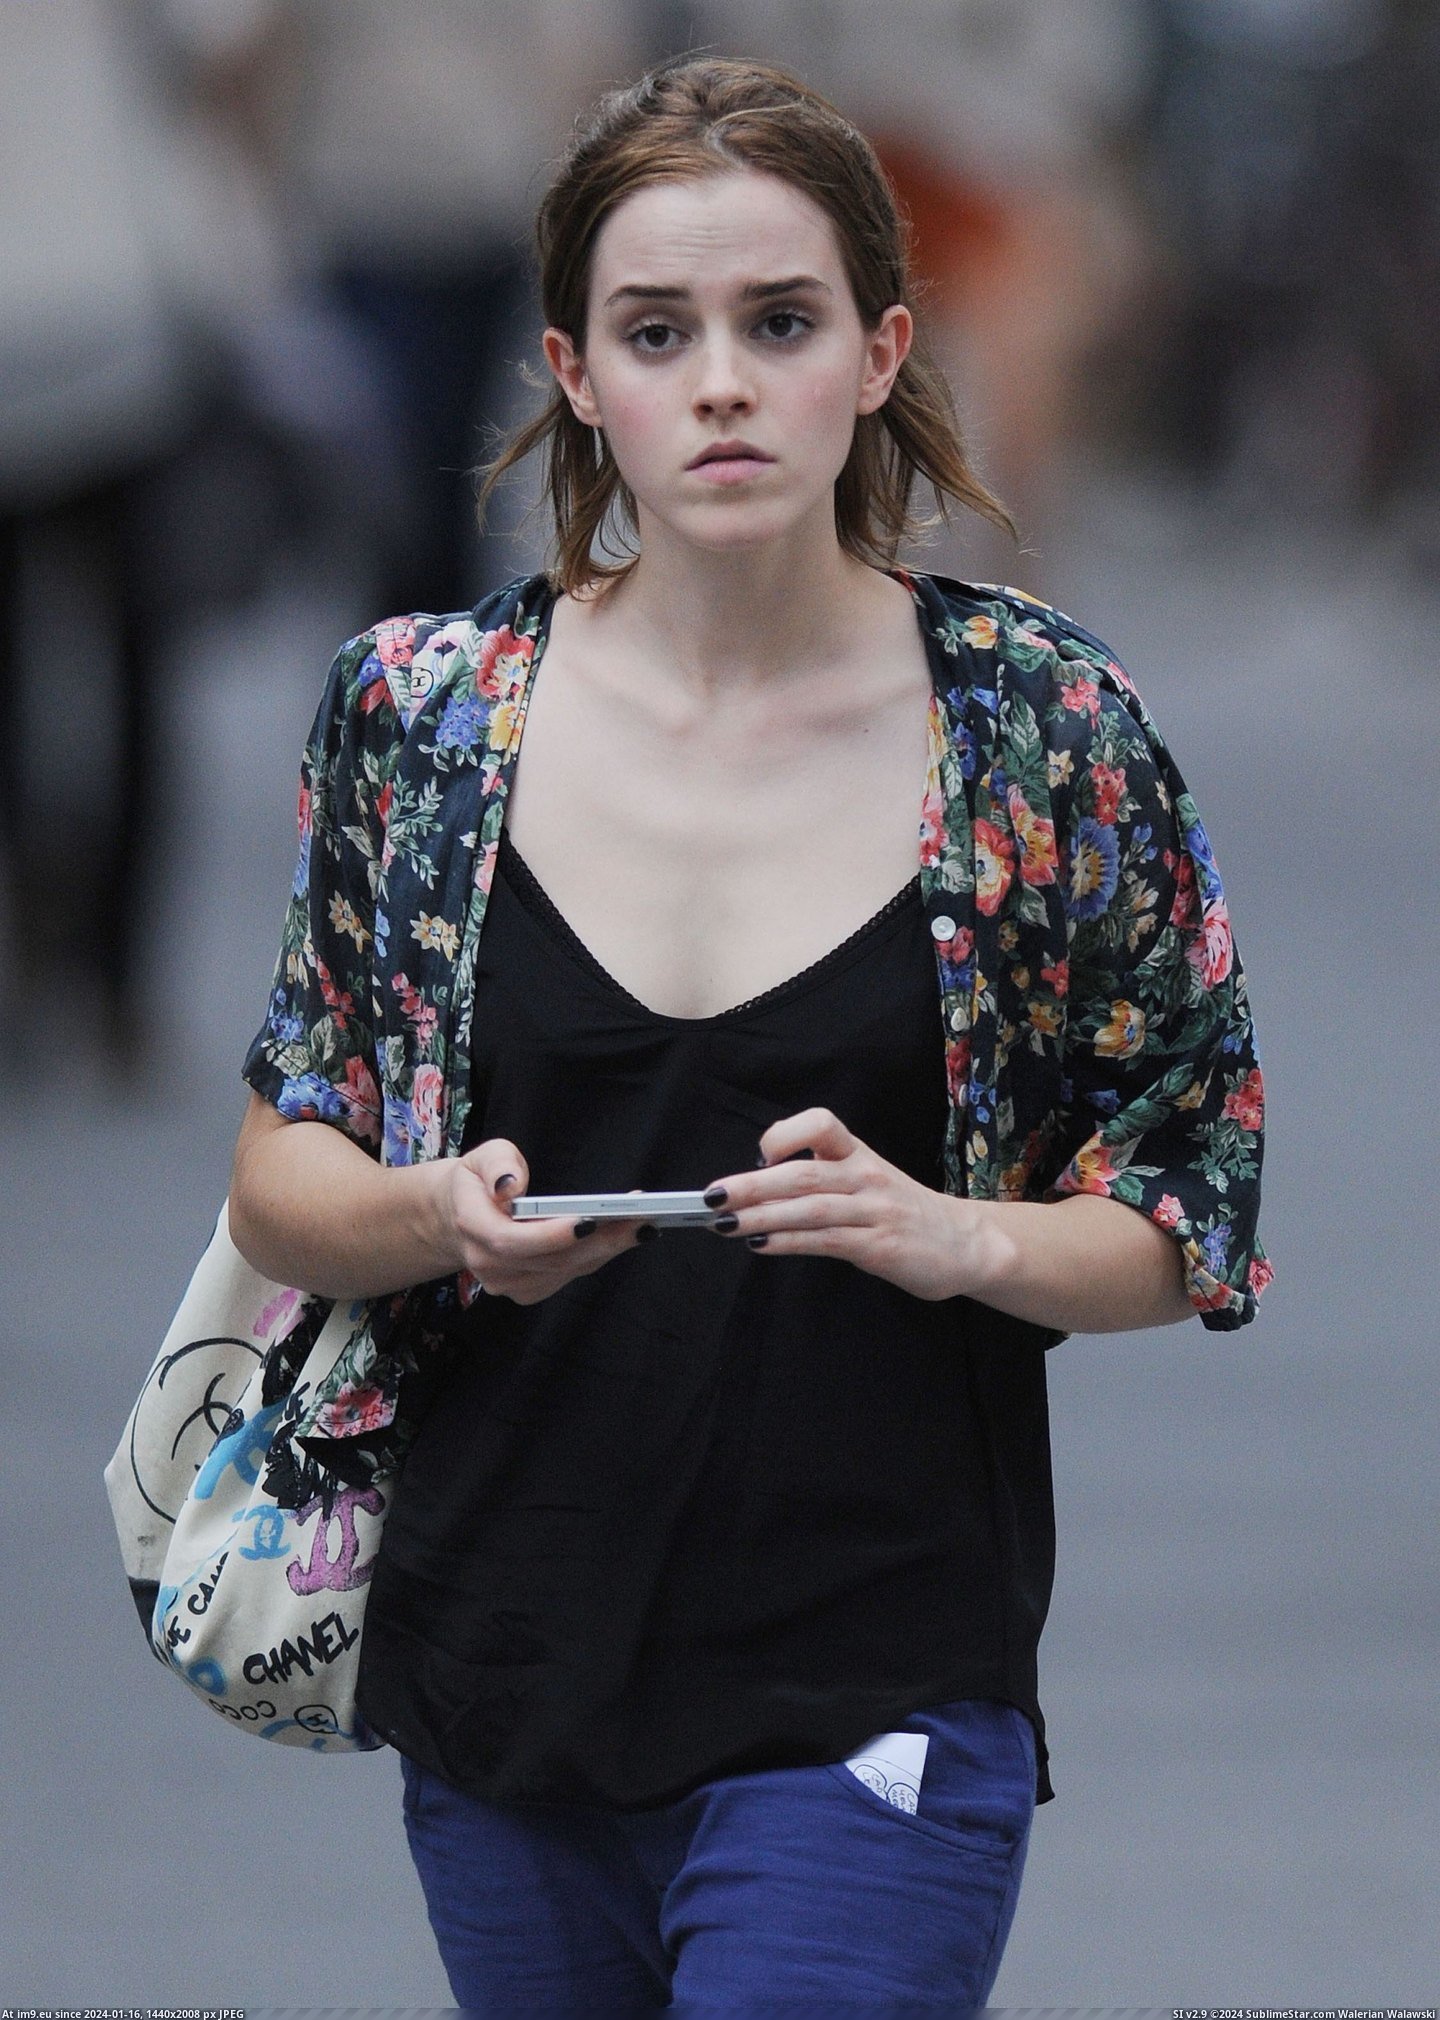 #Photo #New #Out #York #Xfktuva #Emma #Watson #City Emma Watson Out And About In New York City July 26 2012 Xfktuva (emma photo) Pic. (Bild von album Emma Watson Photos))